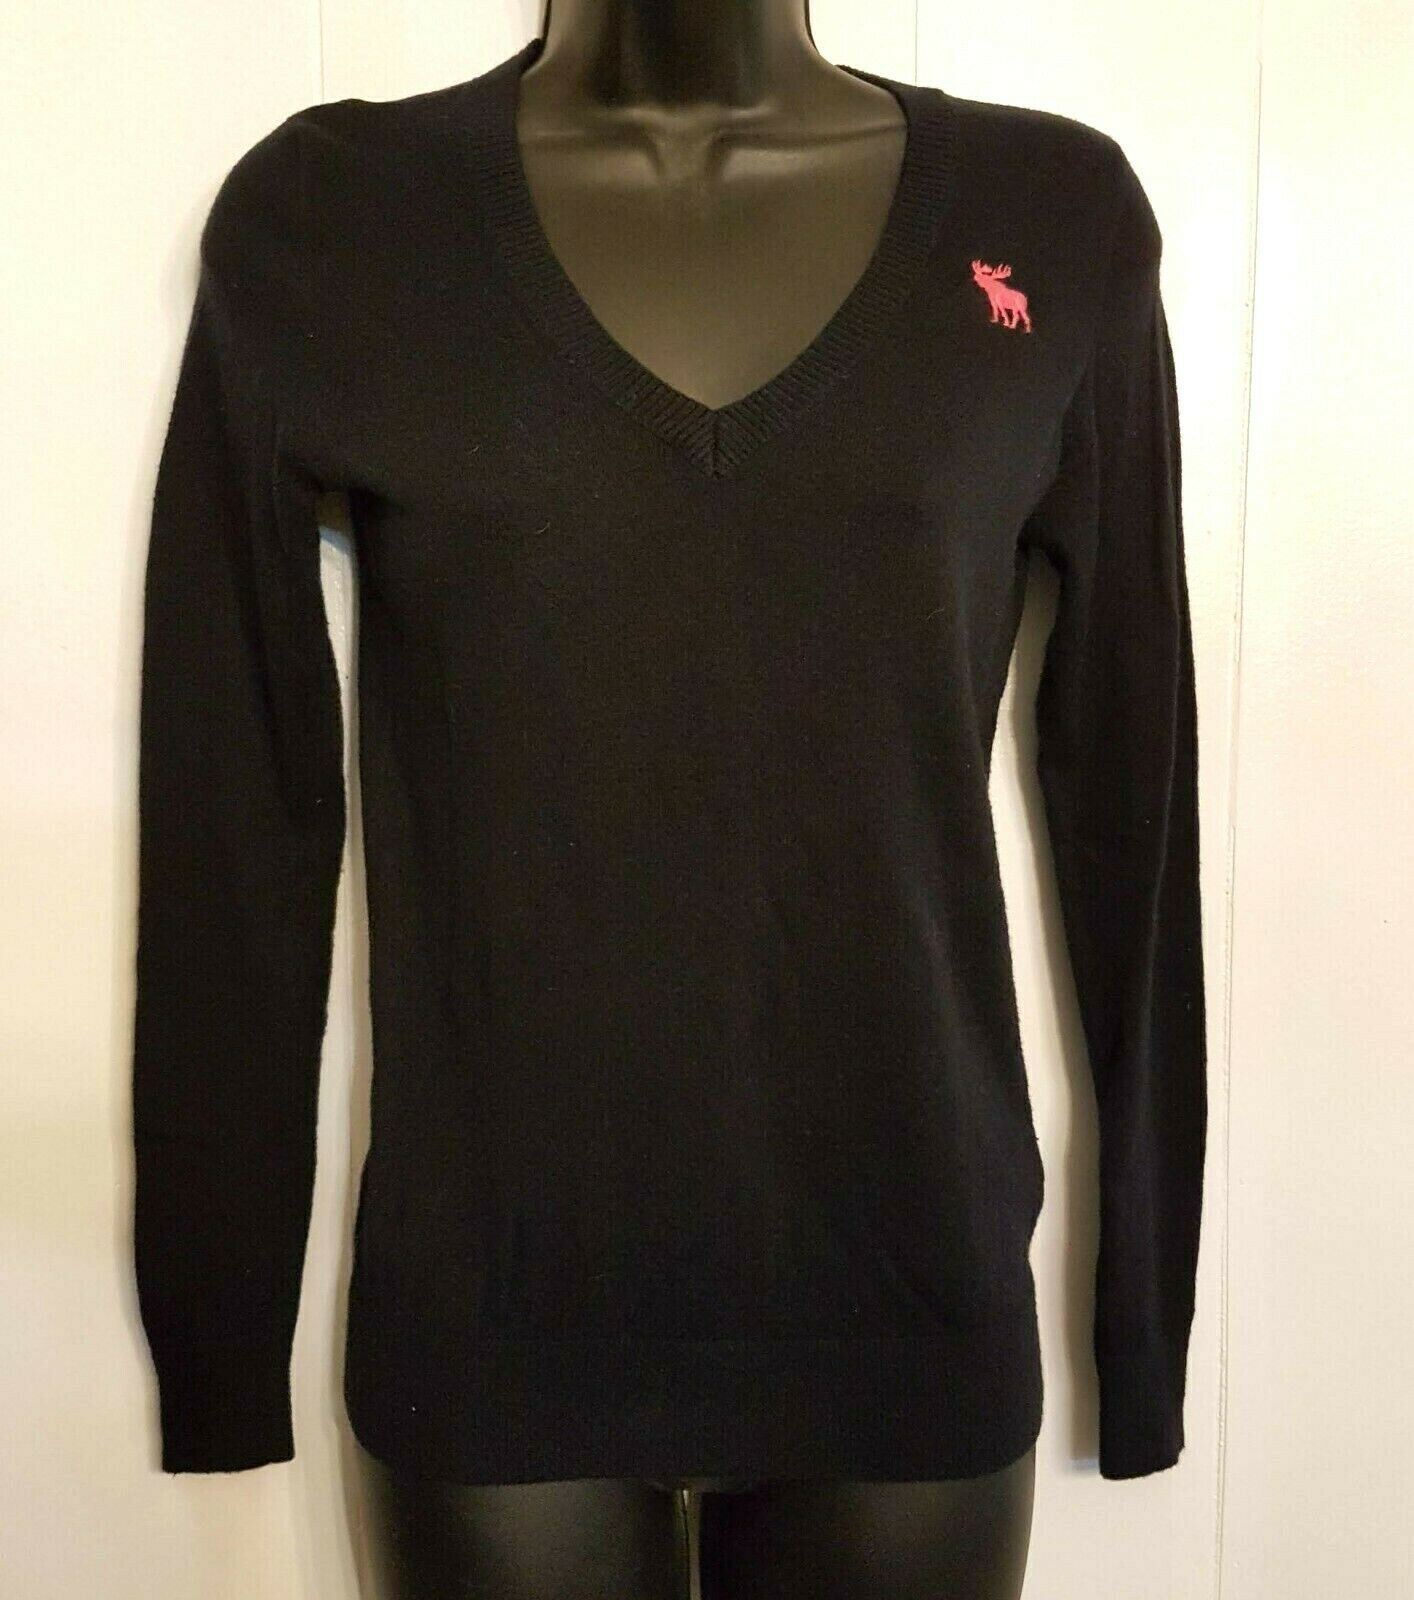 Abercrombie Kids Sweater Black Cotton Blend Knit Top size Large Girls Pink Moose - $18.72